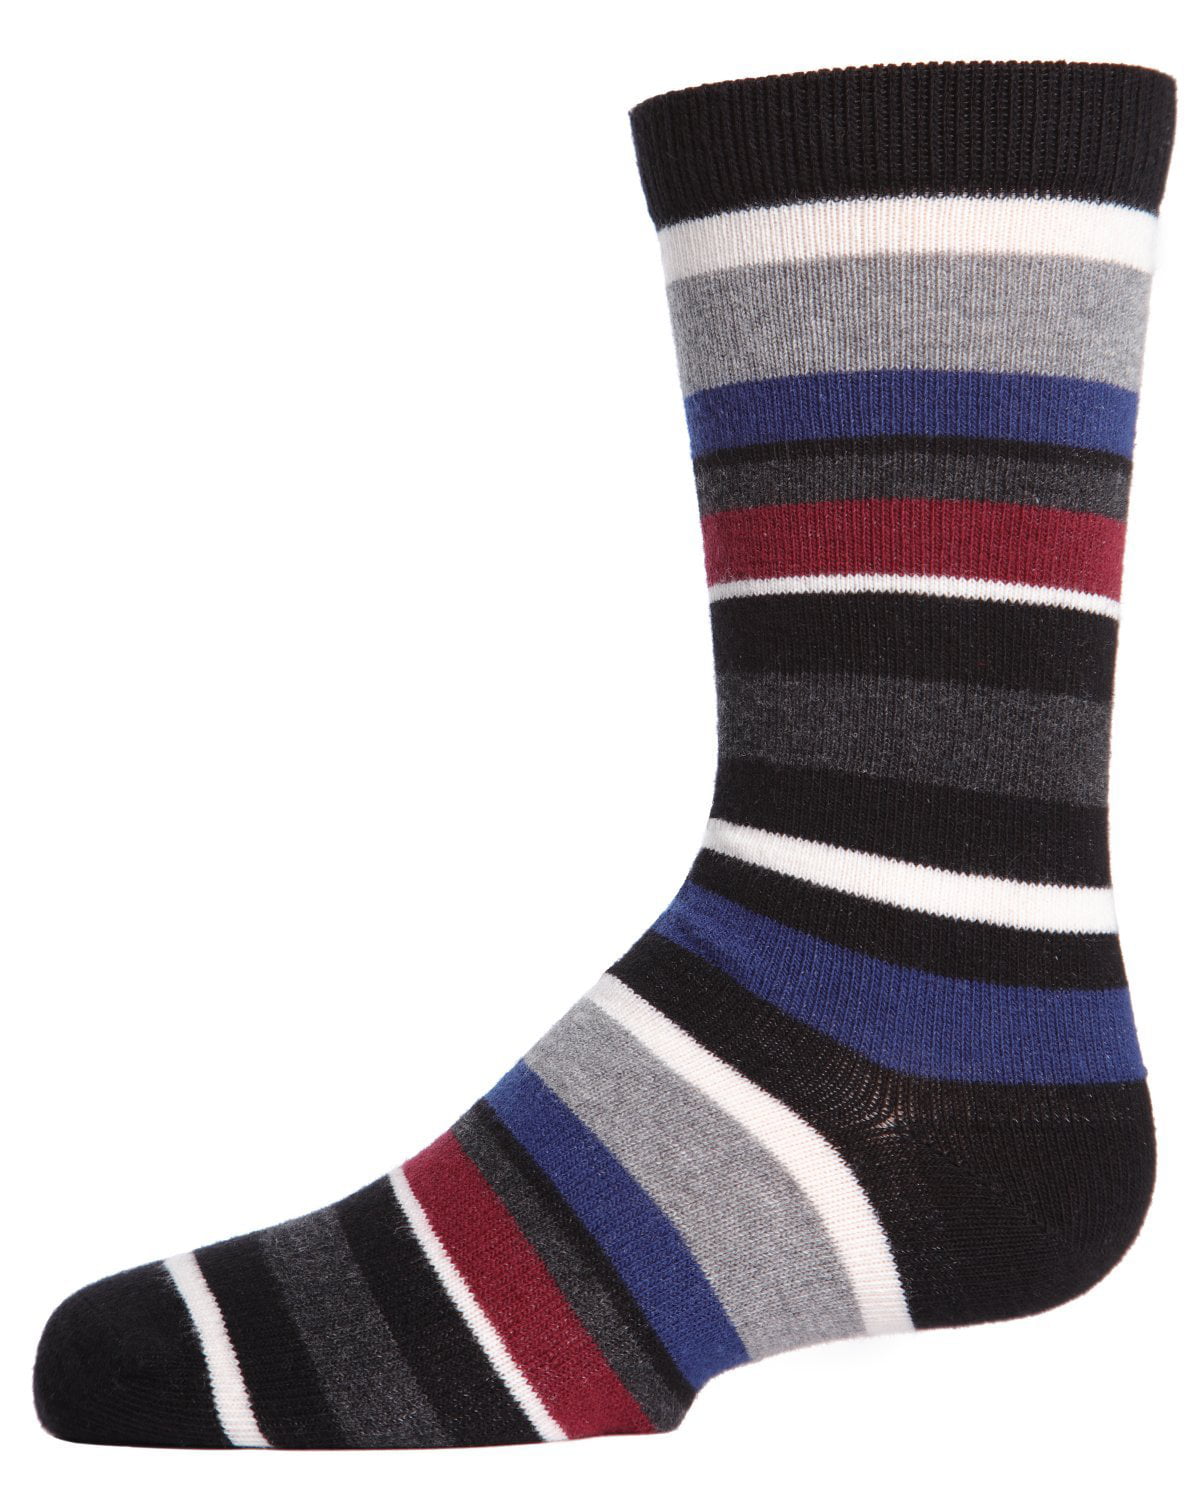 MeMoi - MeMoi Bright Stripes Boys Crew Socks | Fun Socks for Boys by ...